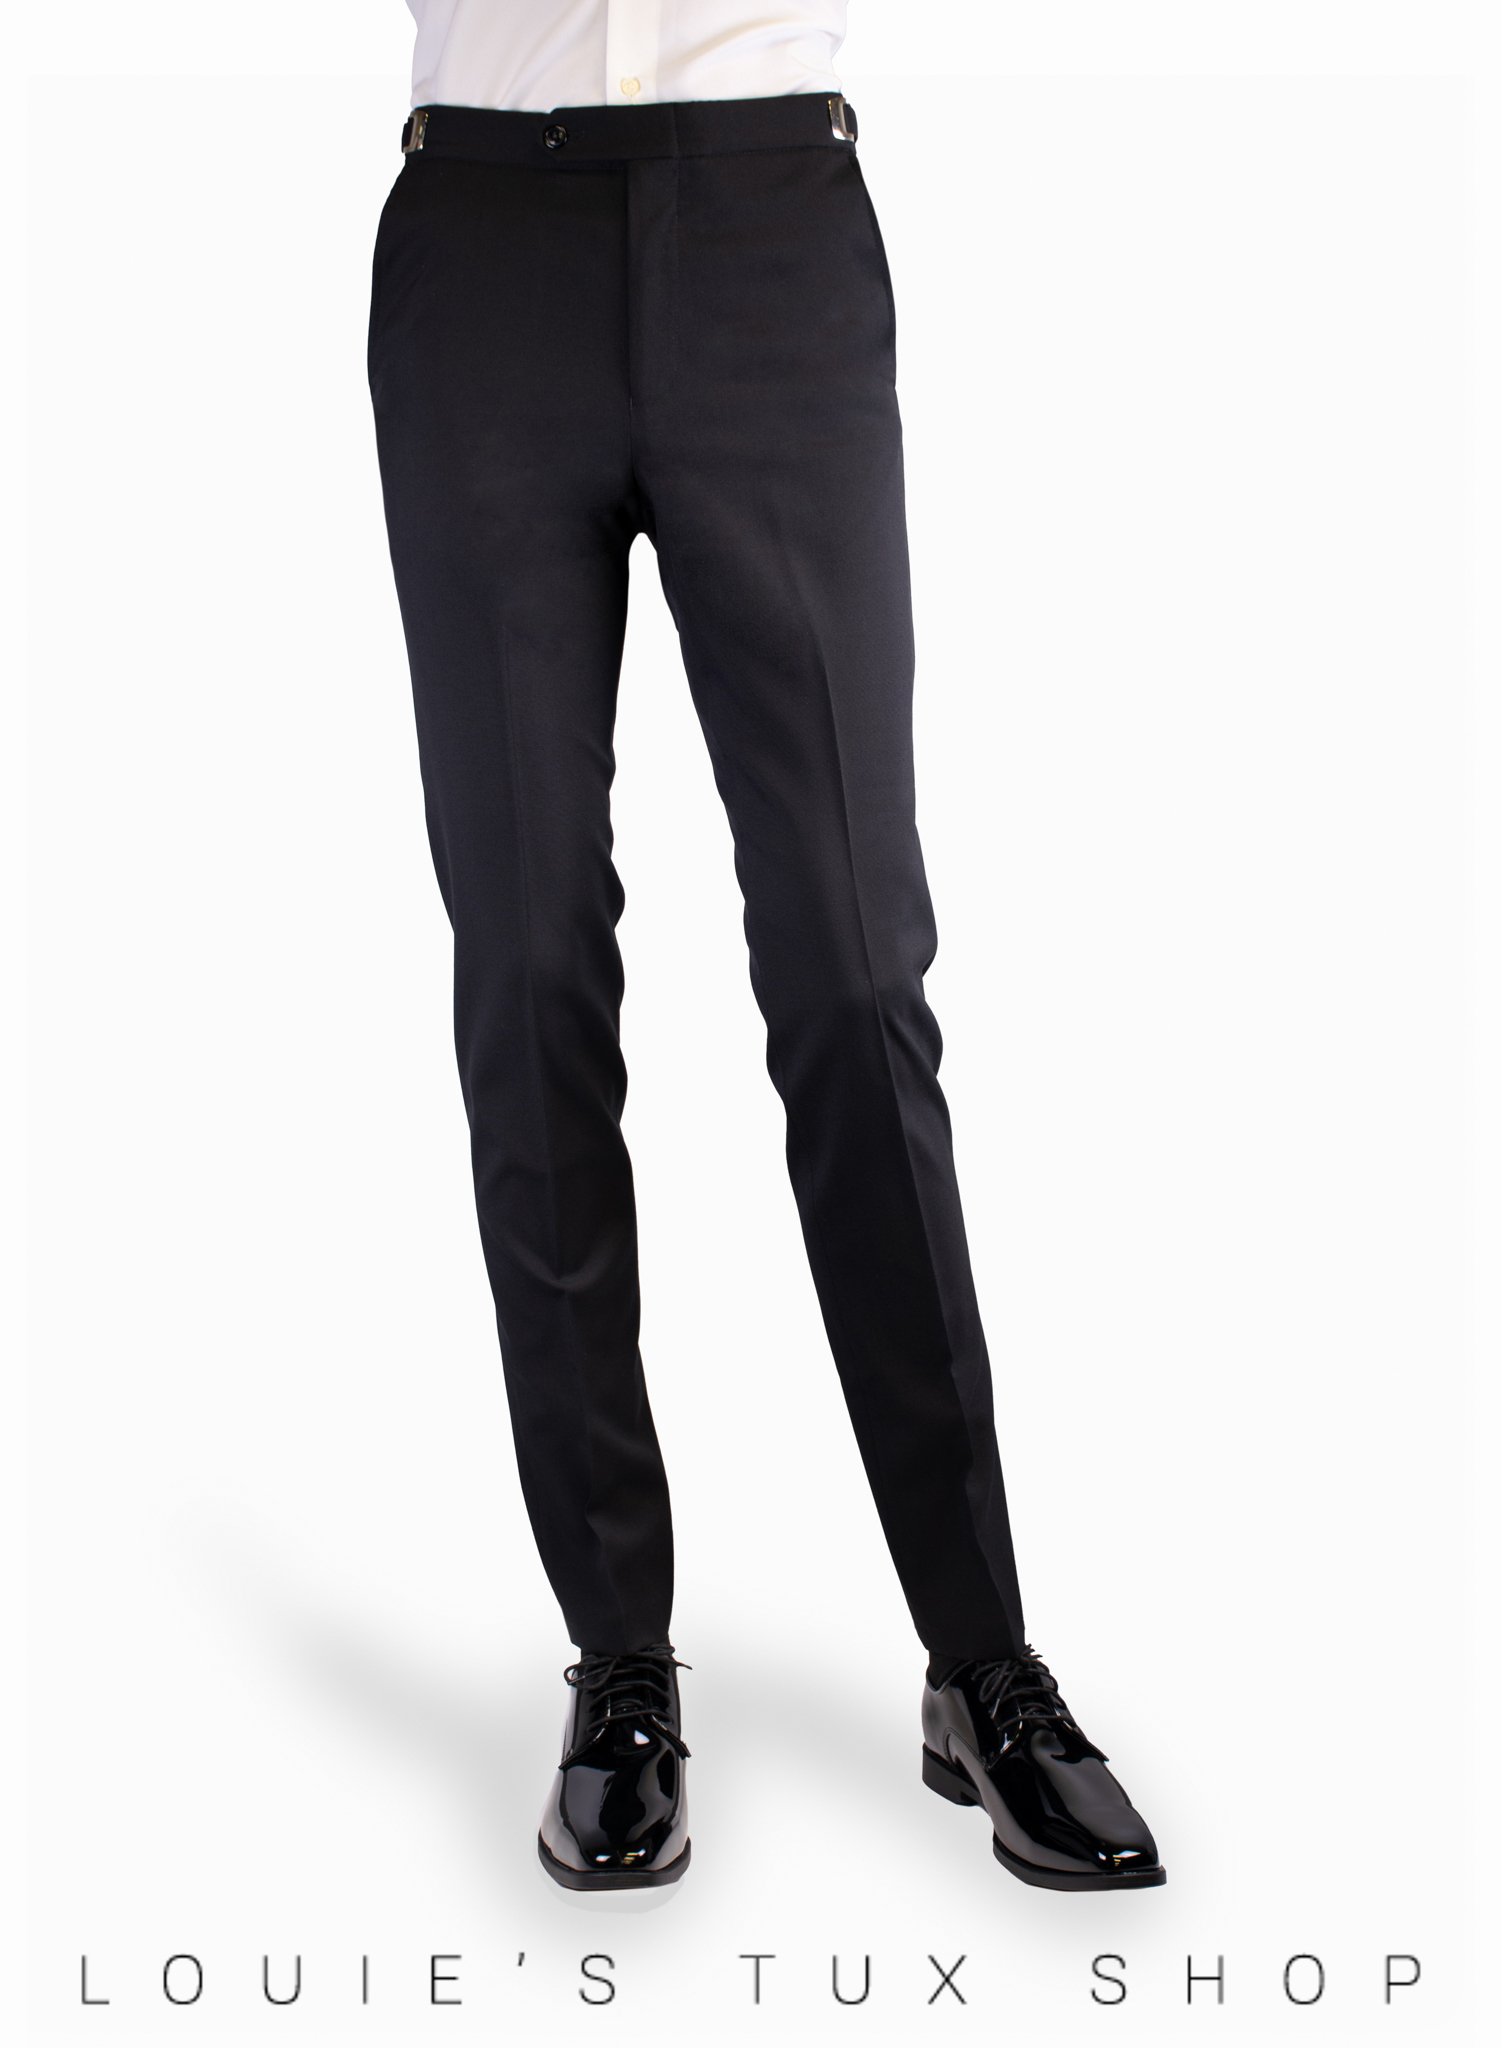 Mens Premier Polyester Trousers Black – Betheny Uniforms